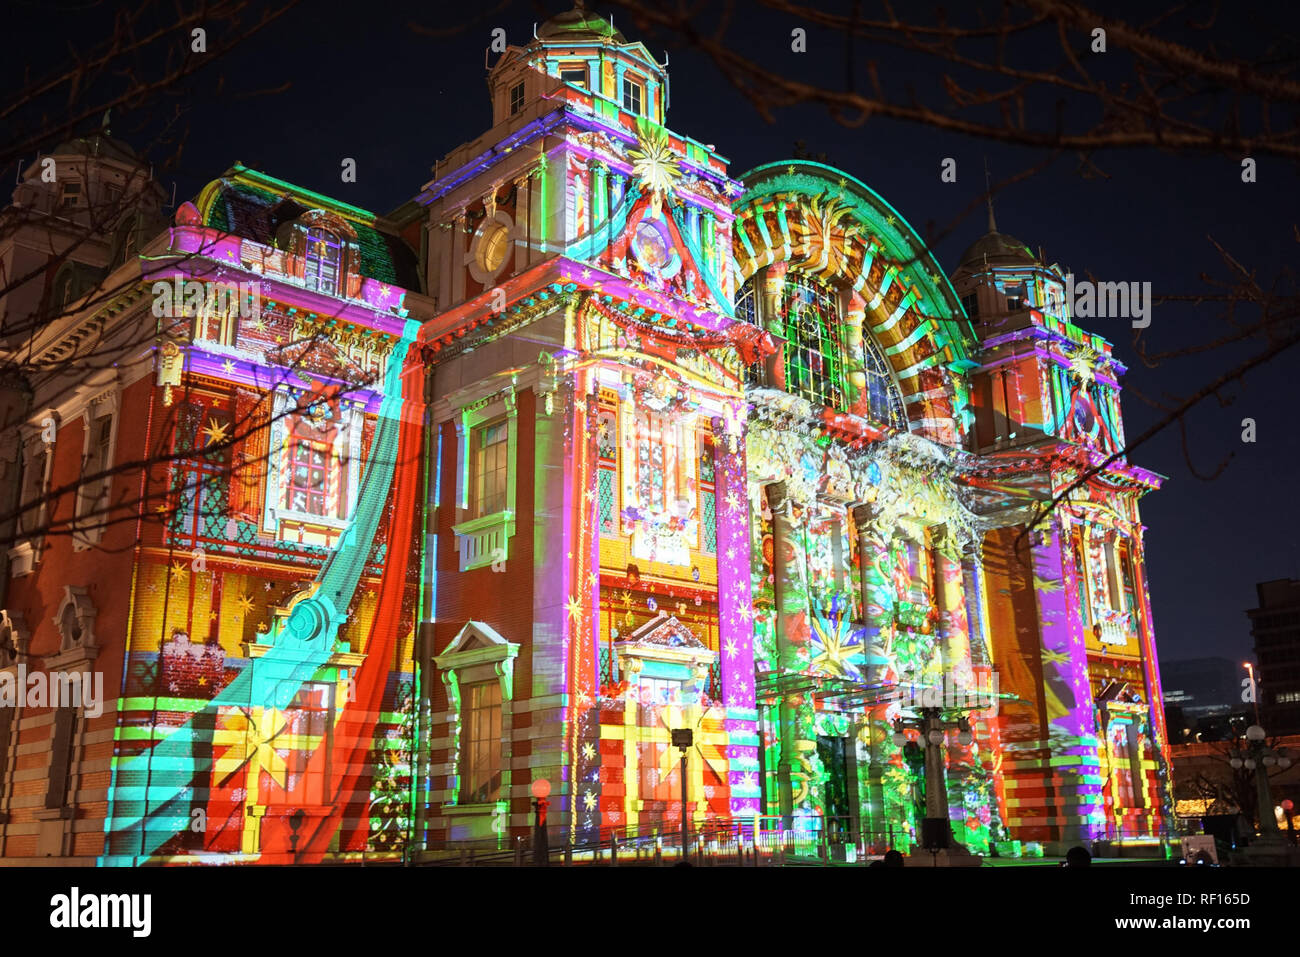 Hikari Renaissance winter illumination or projection mapping Osaka Japan Stock Photo